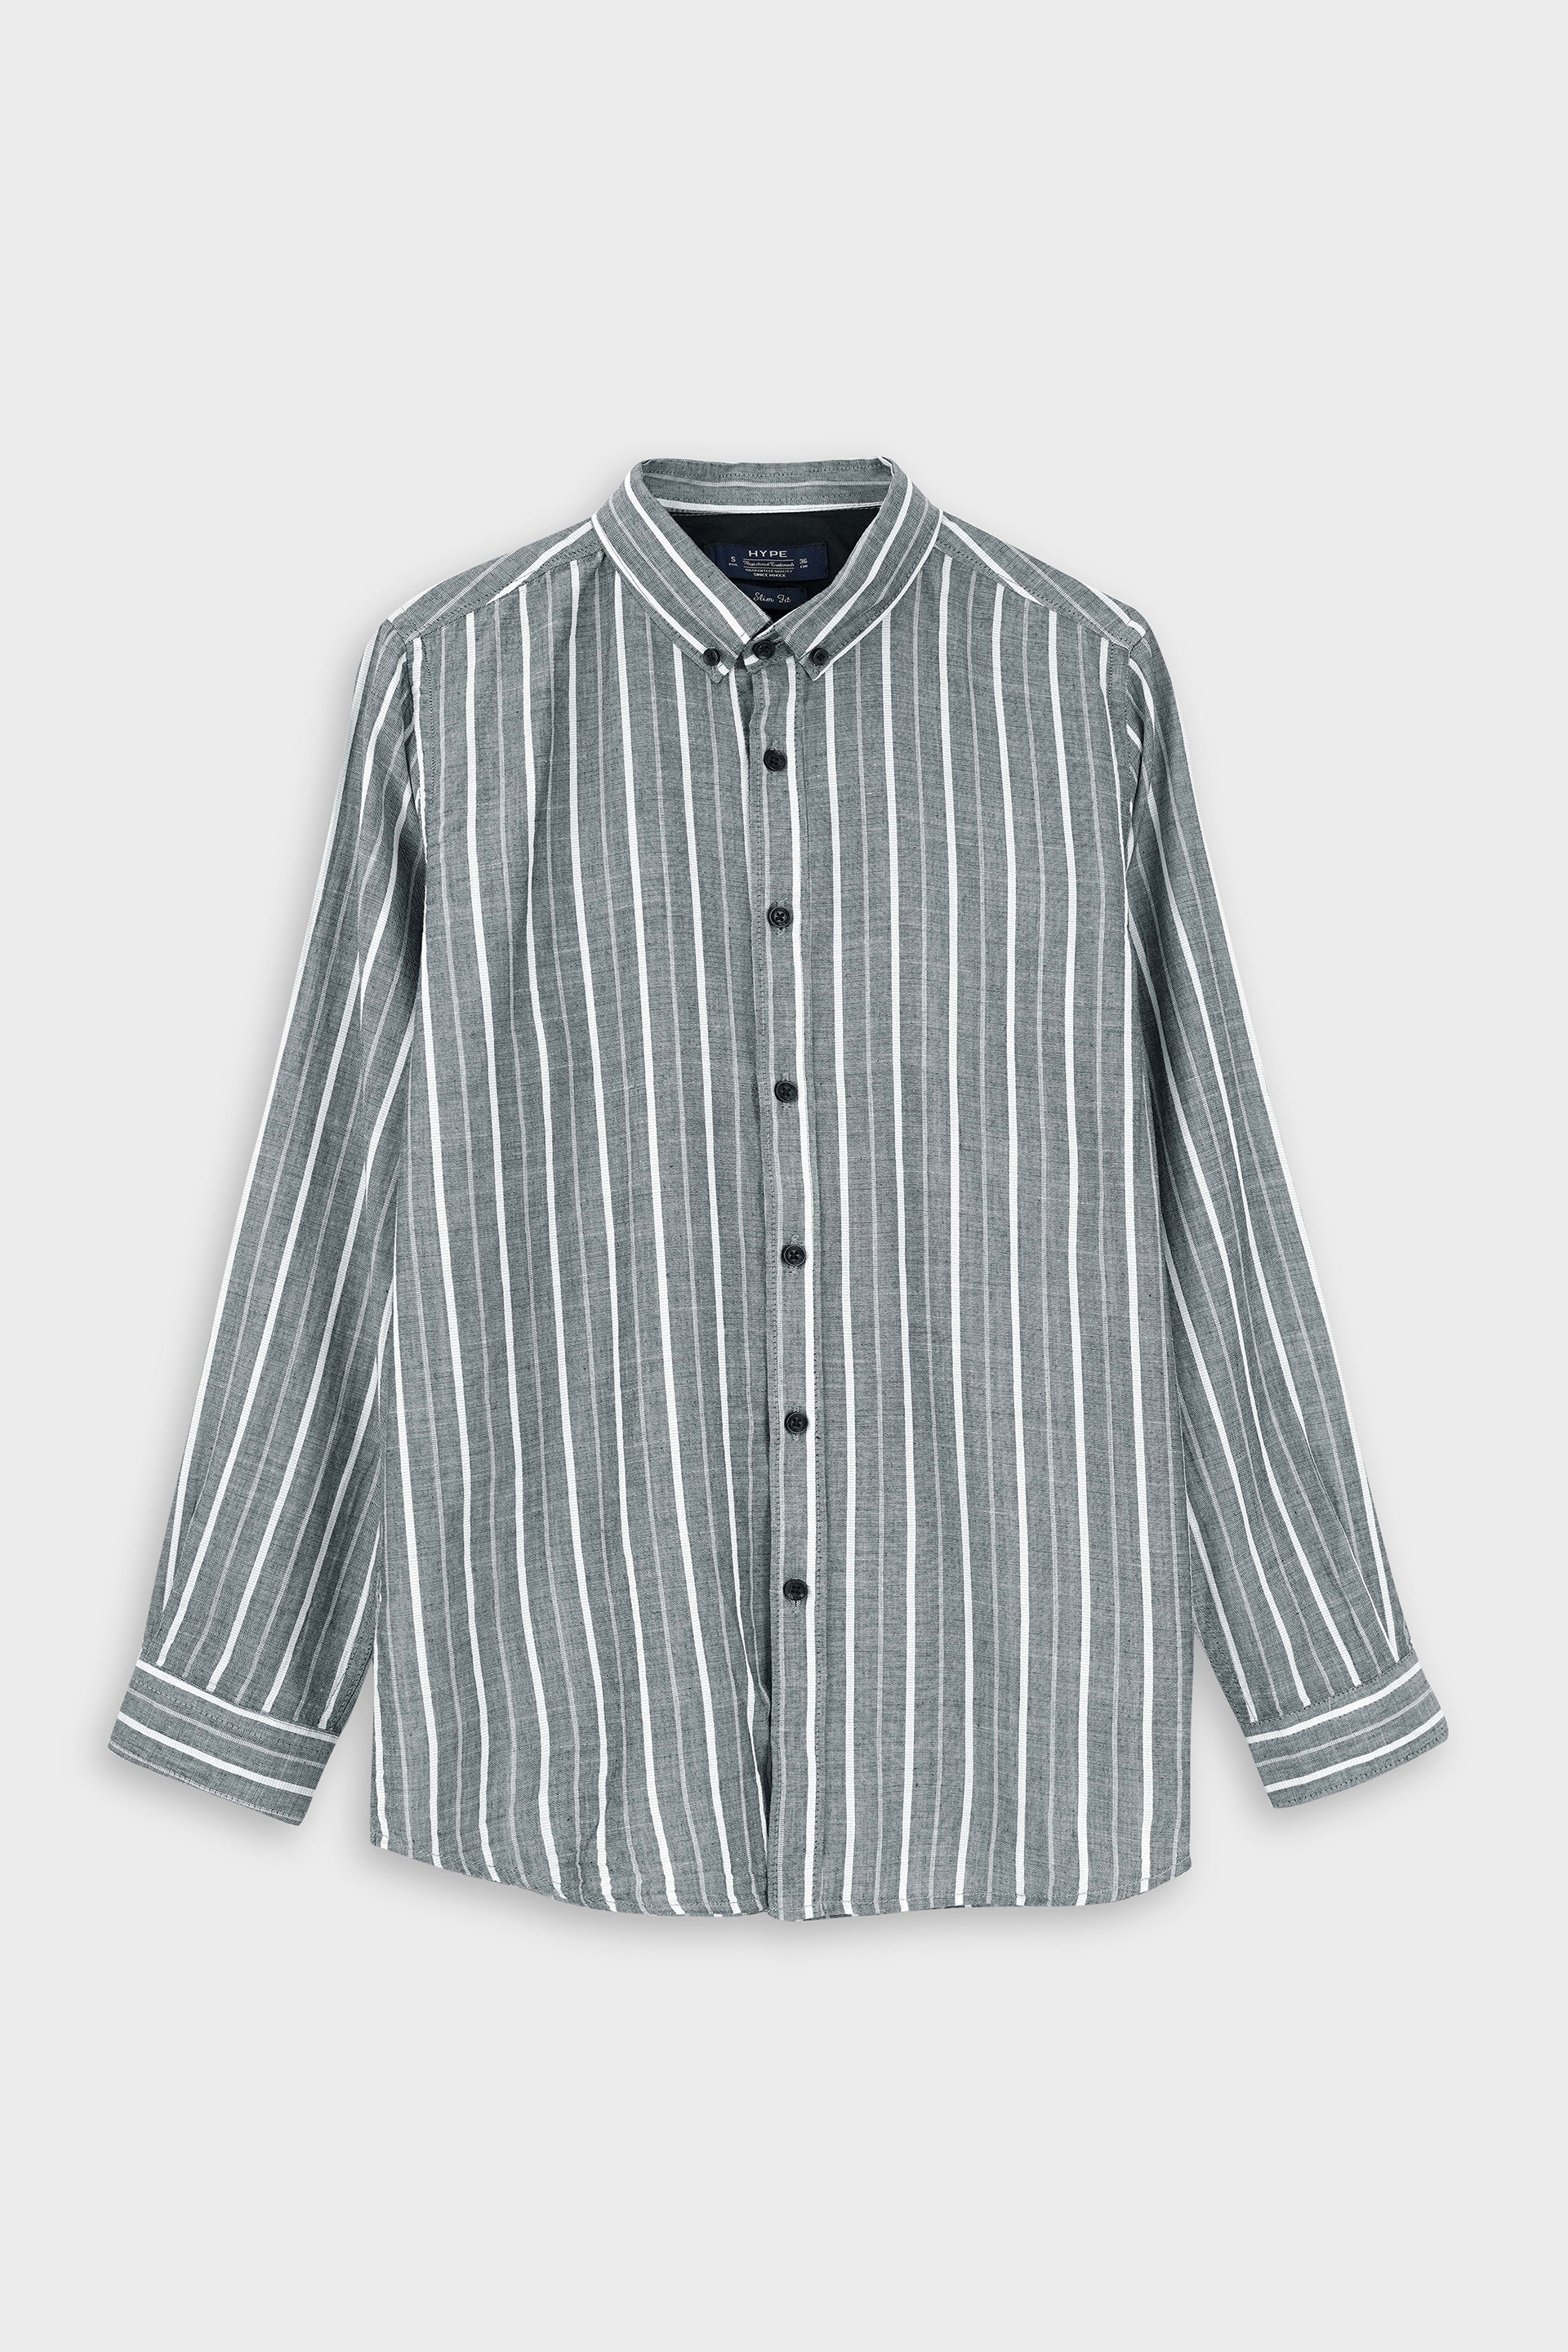 Stripes Cotton Casual Shirt 002431